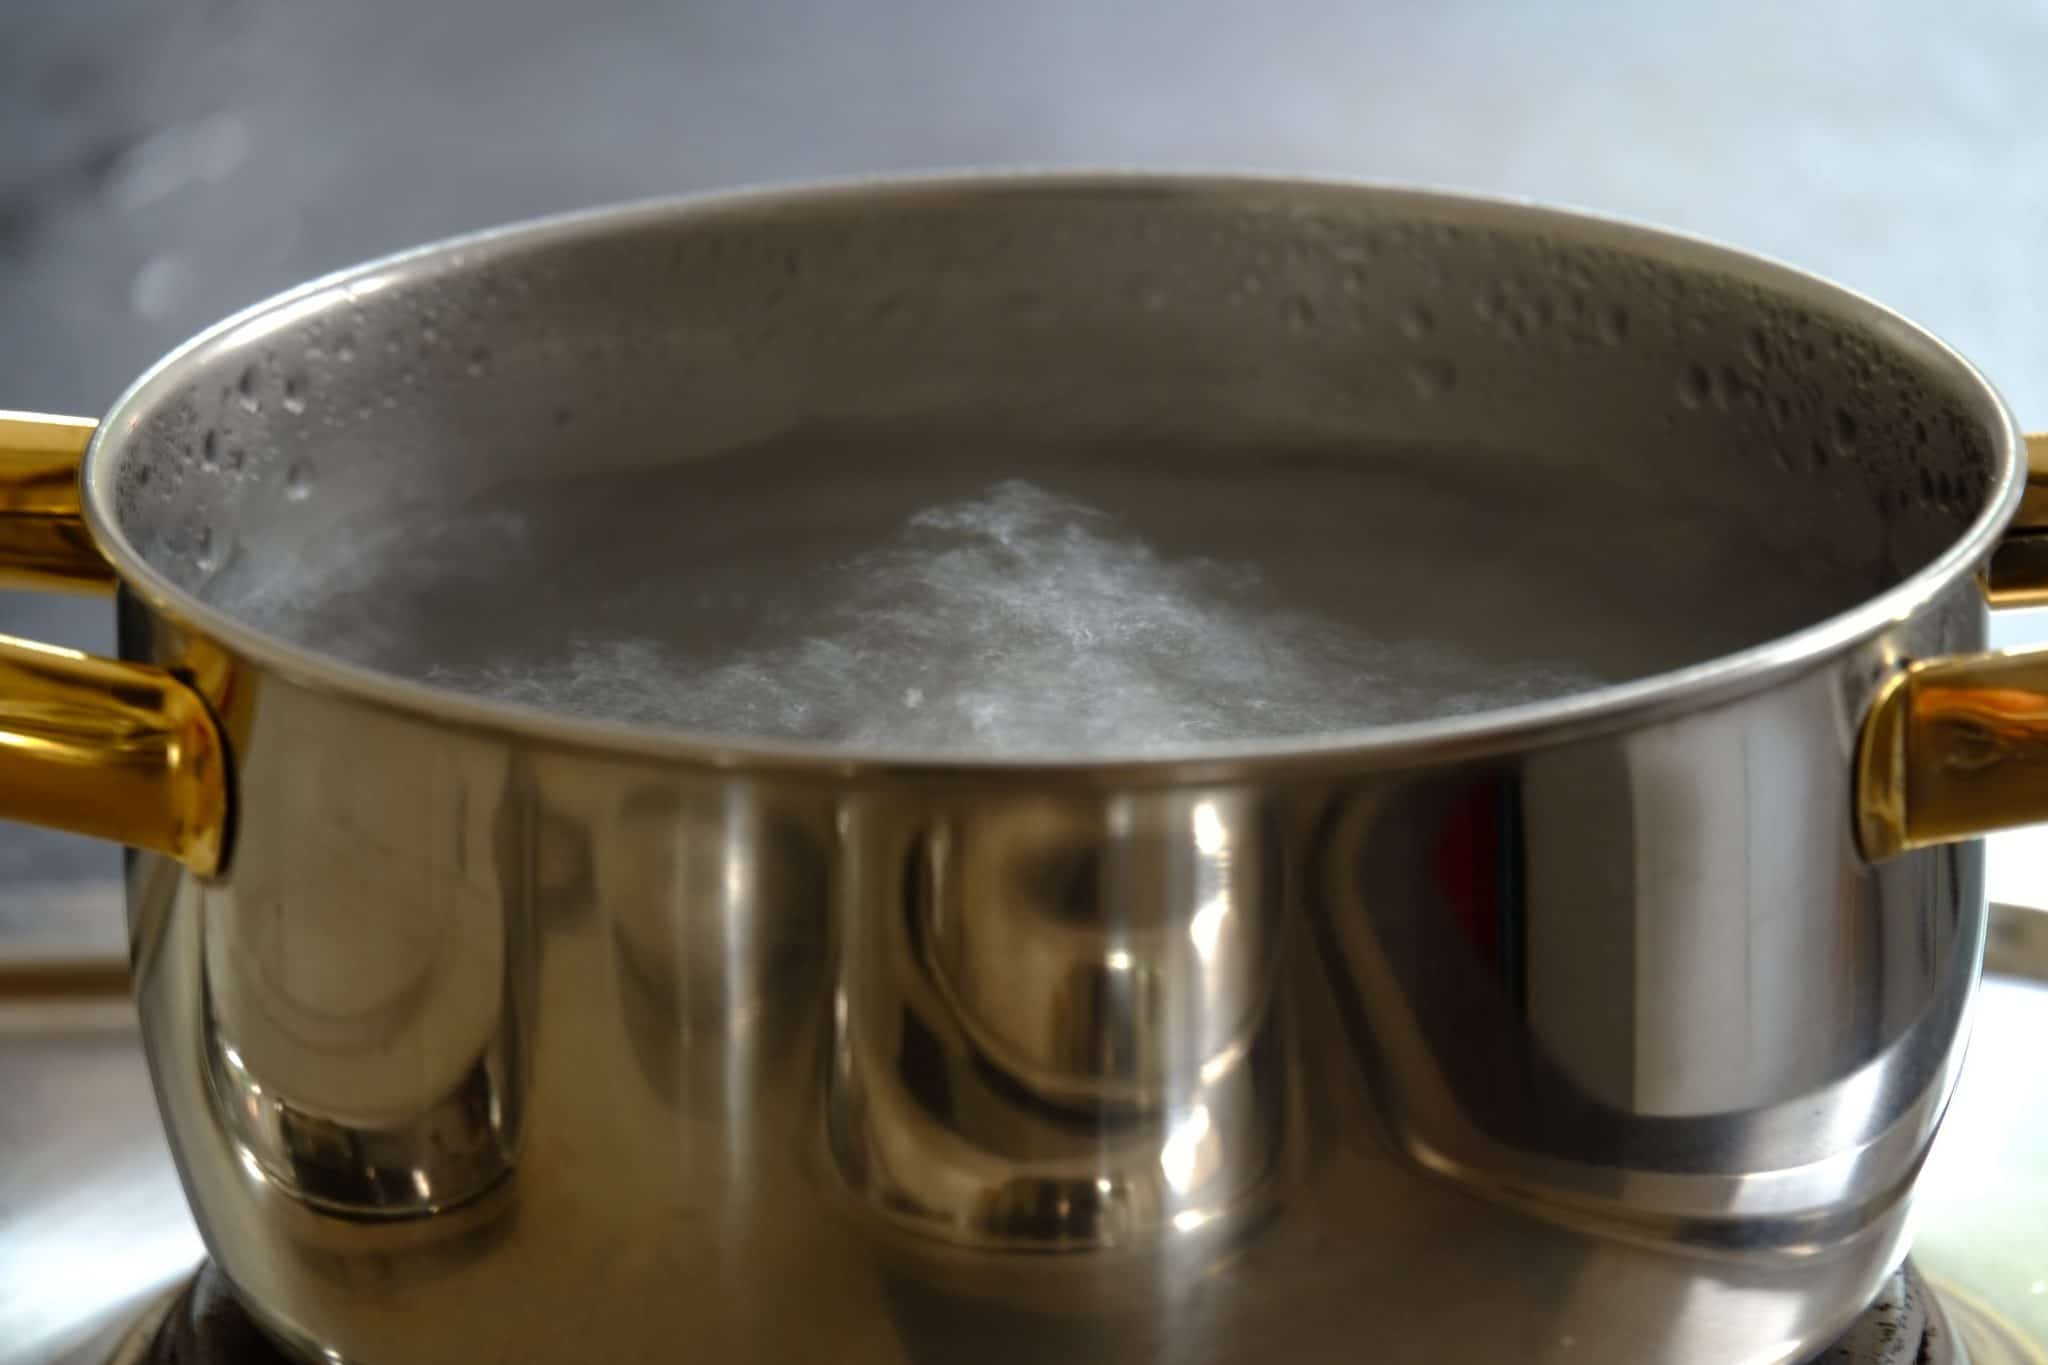 Atlanta's boil water advisory has been lifted